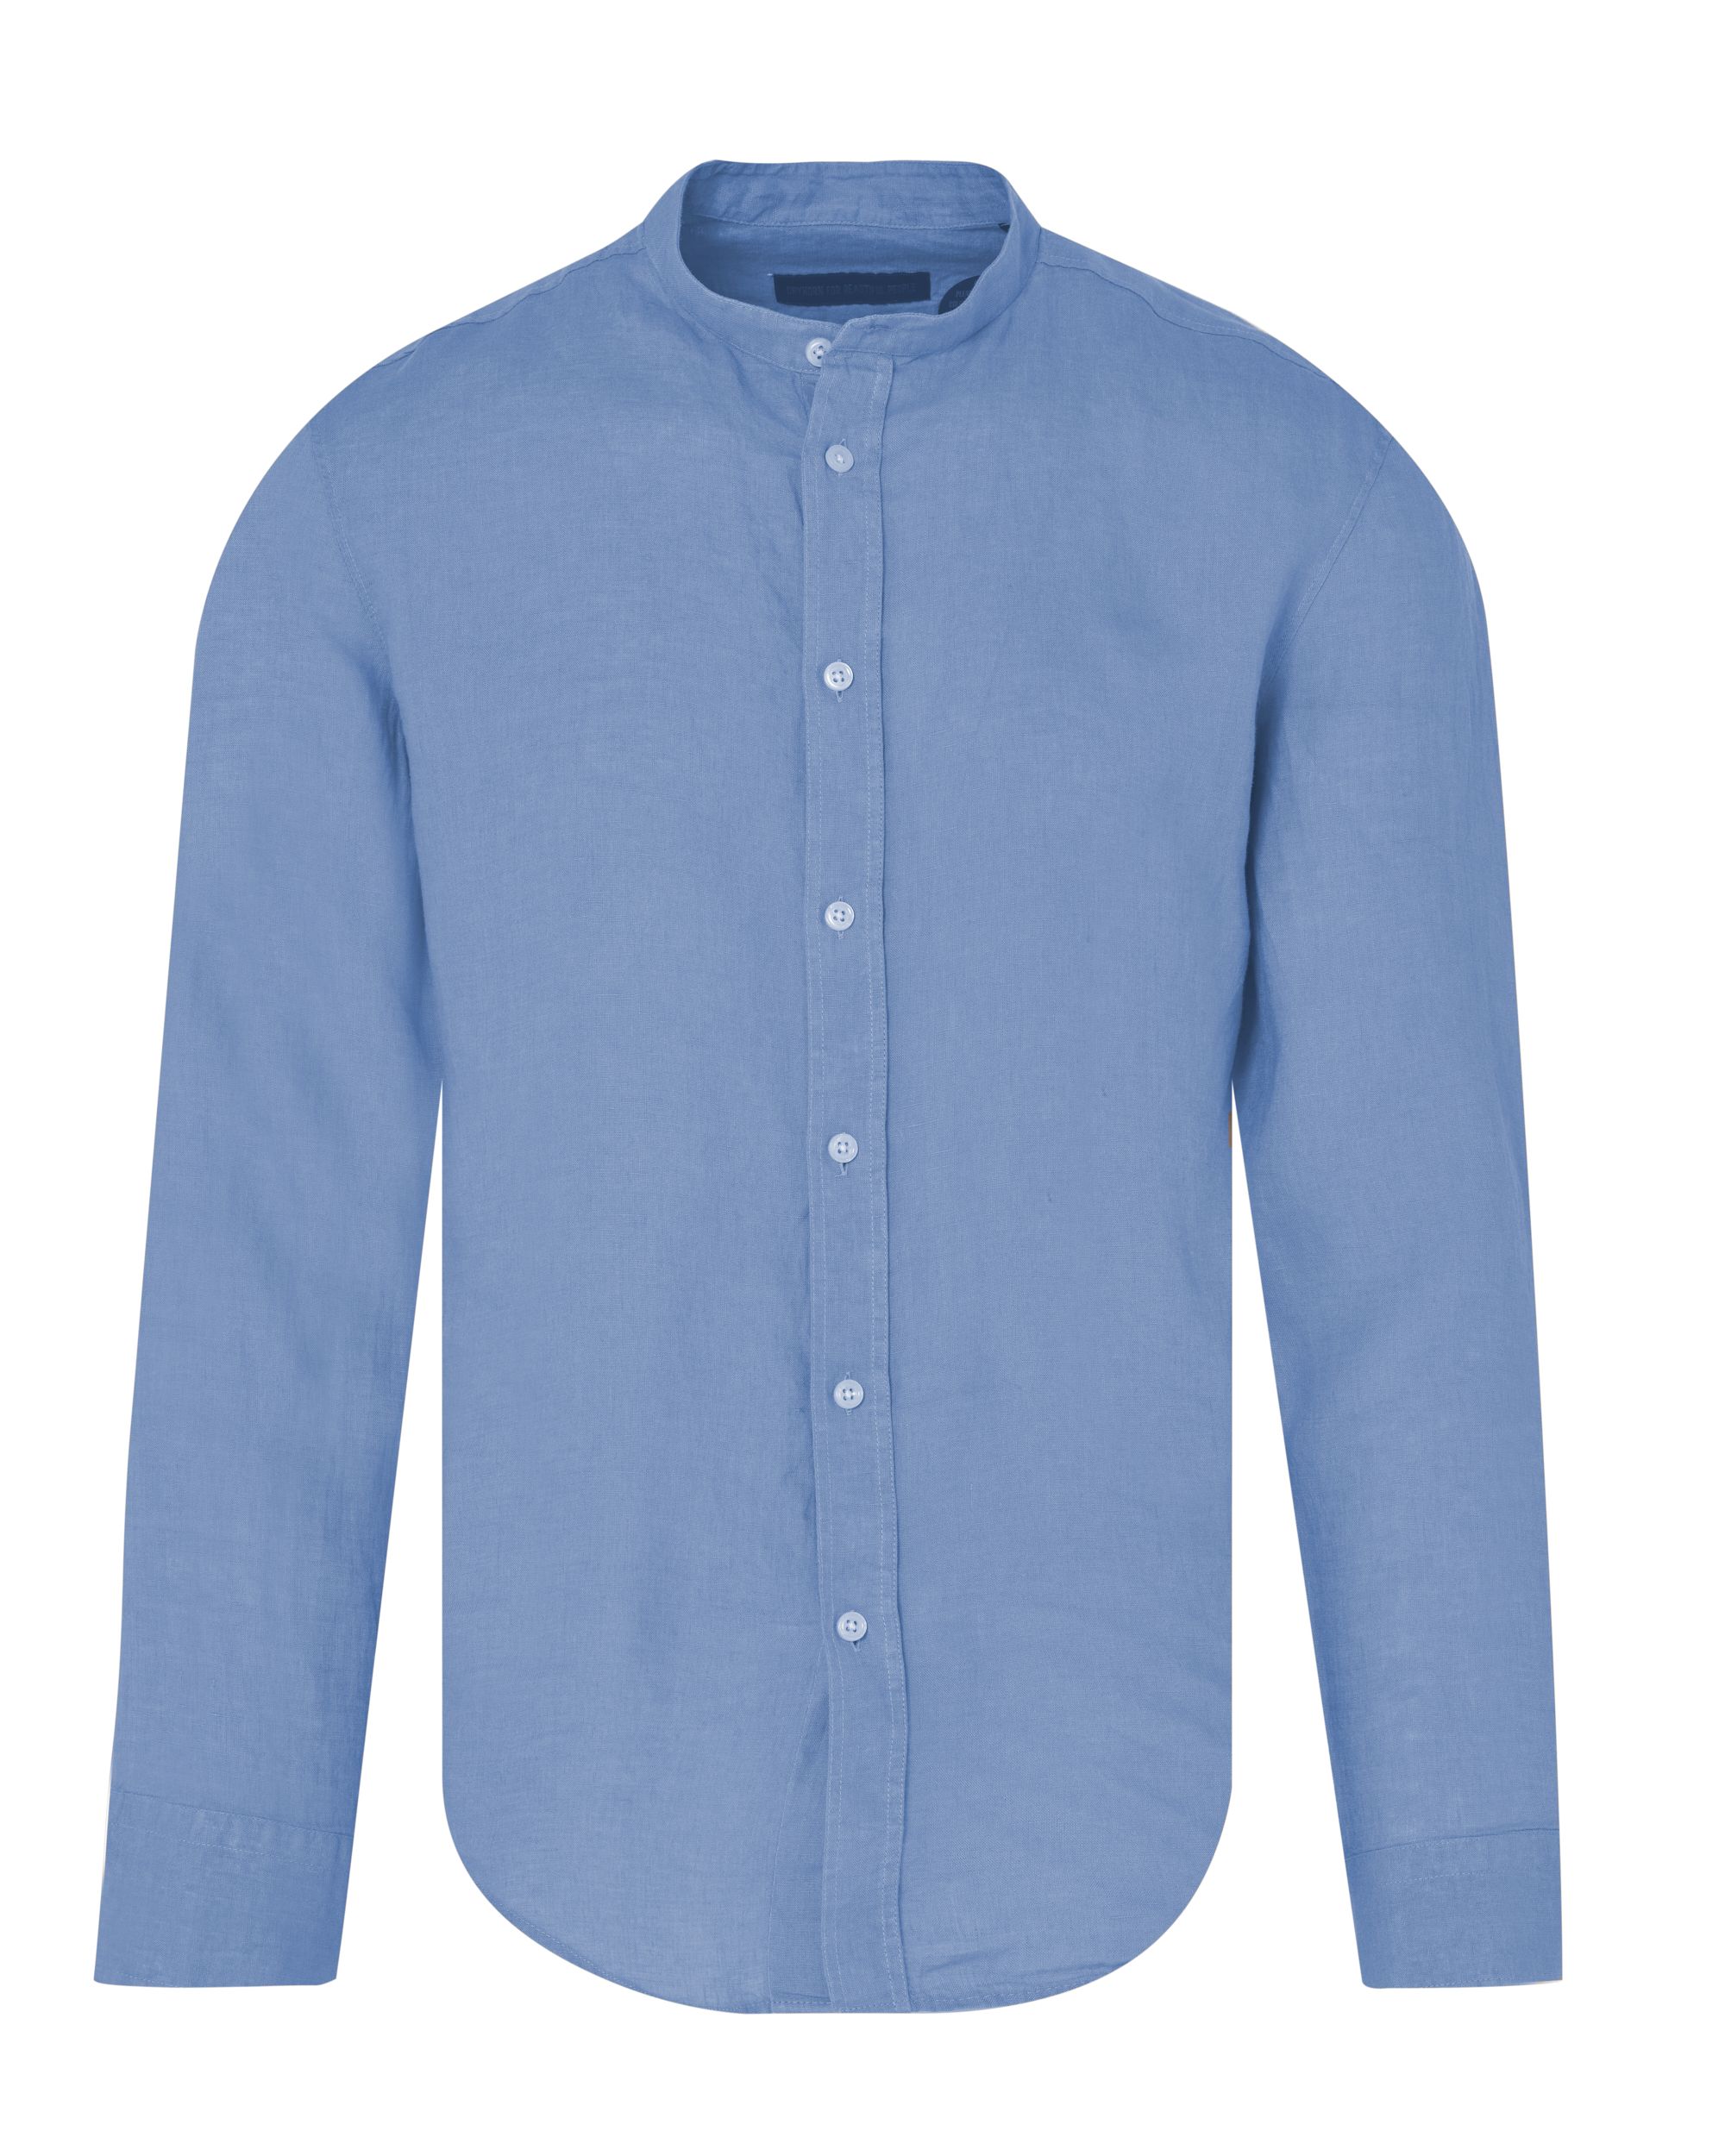 Drykorn Tarok Overhemd LM Blauw 085545-001-L